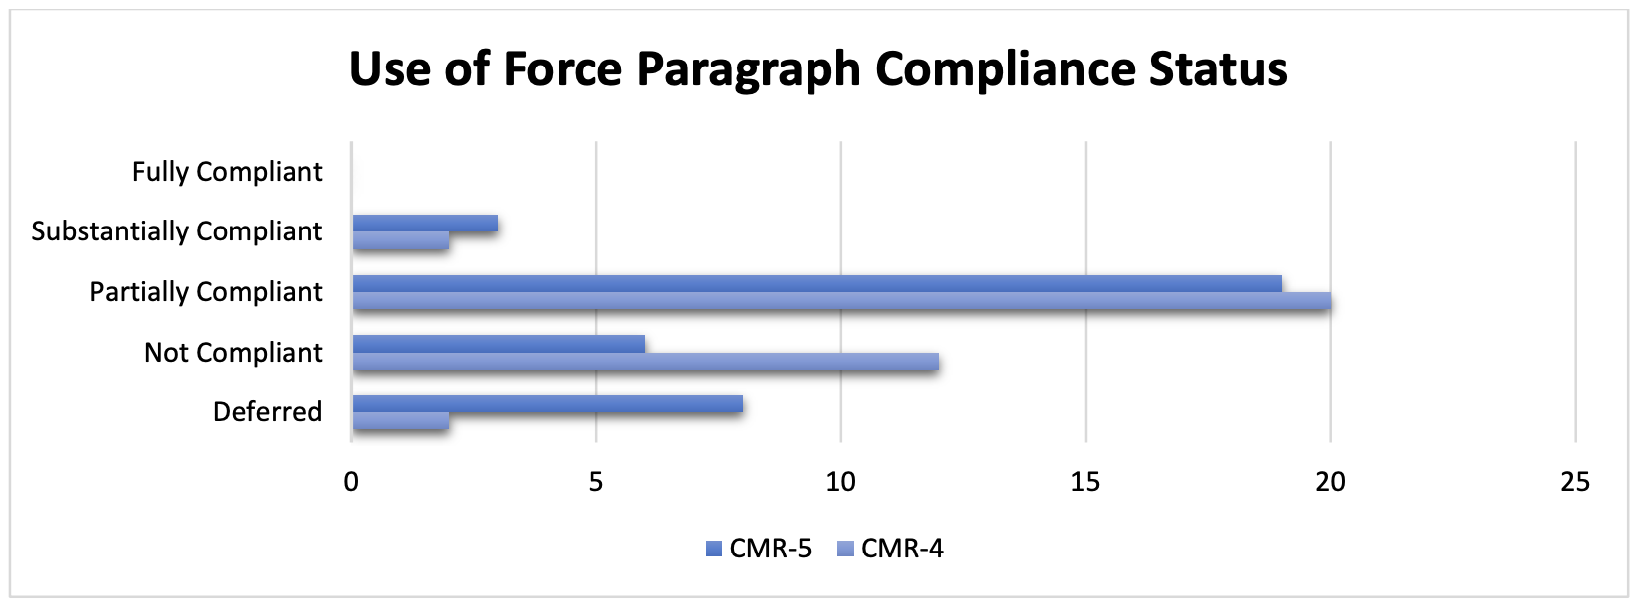 Figure 3. Use of Force: Compliance Status